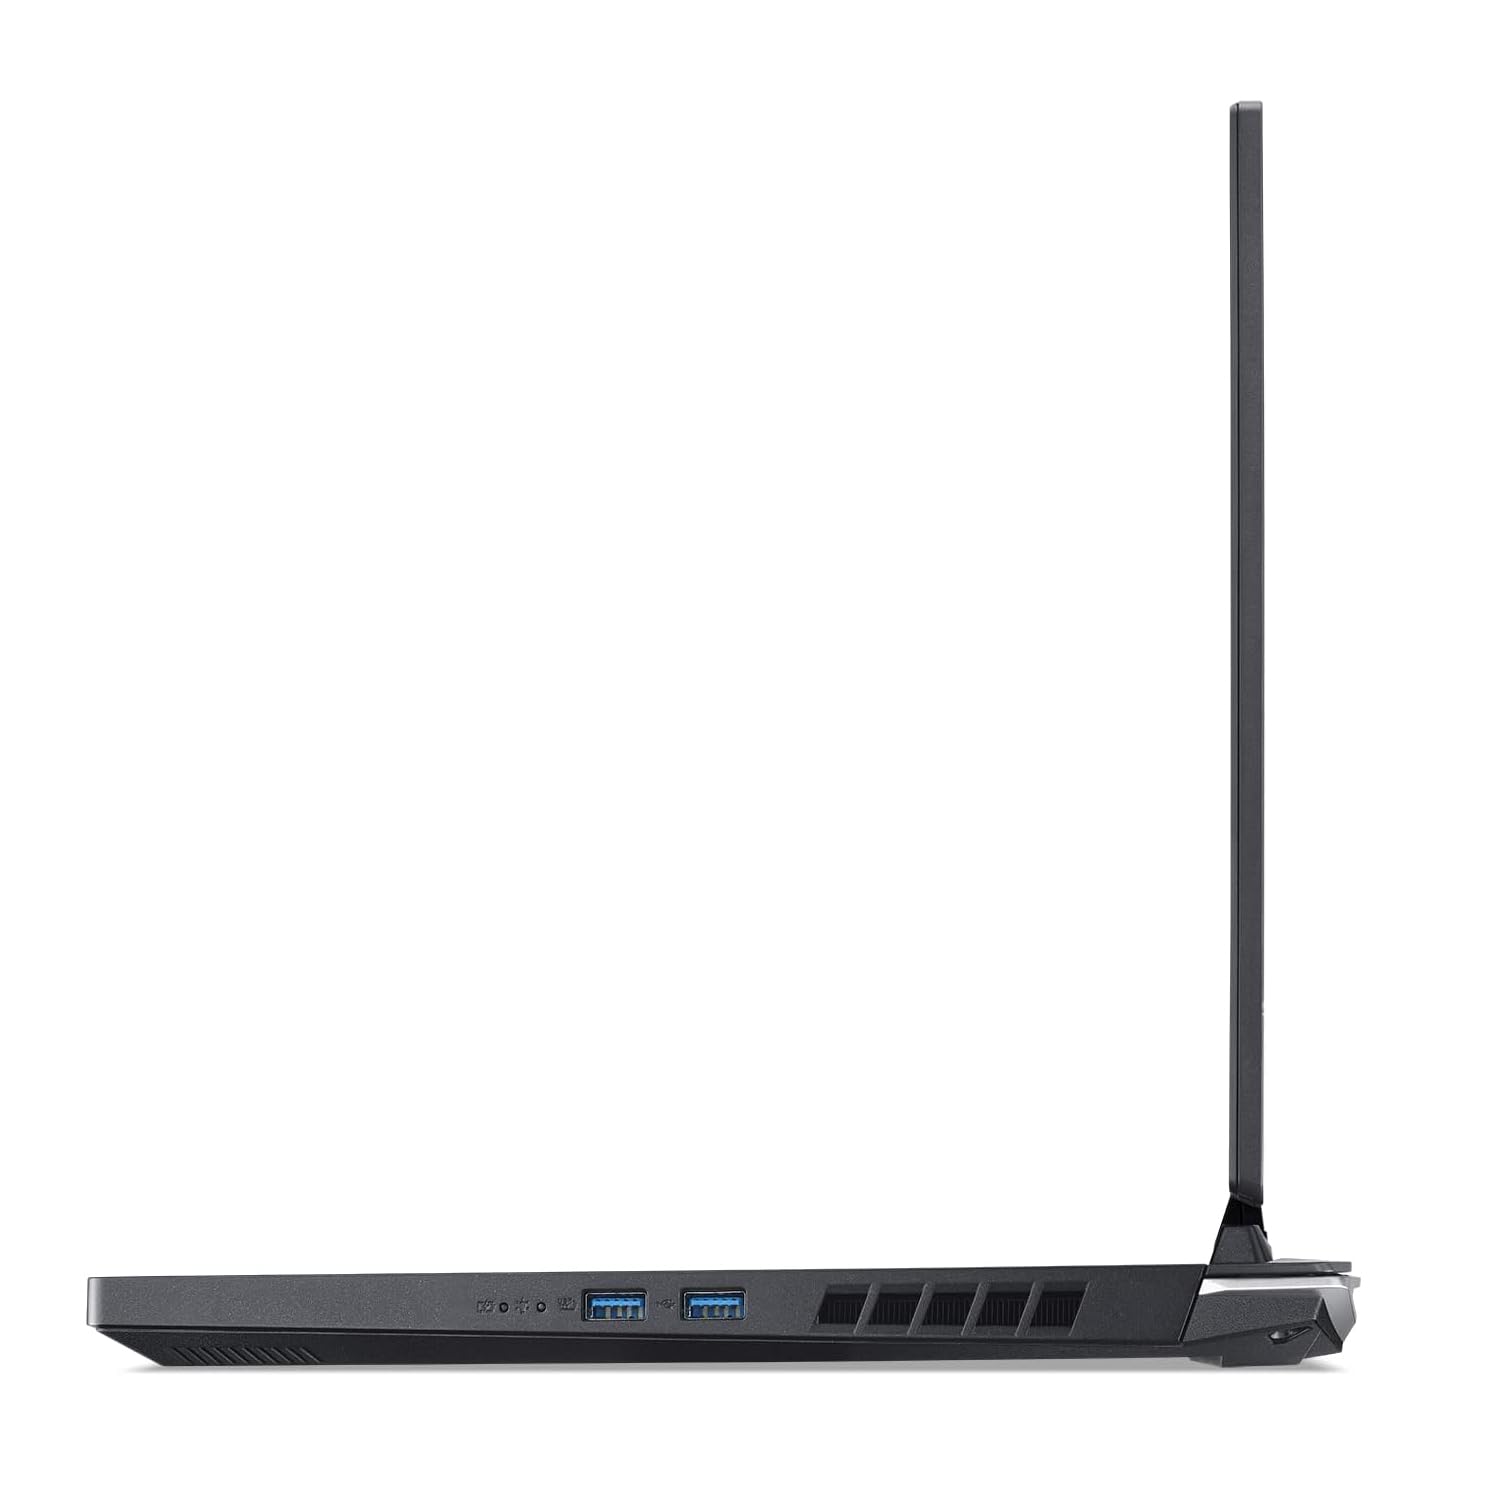 Acer Nitro 5 Gaming Laptop, 15.6/ FHD IPS 144Hz Display, 12th Gen Intel Core i5-12500H, GeForce RTX 3050 Ti 4GB, 32GB RAM, 1TB PCIe 4.0, Backlit KB, Thunderbolt 4, HDMI, Wi-Fi 6, Win 11 Pro